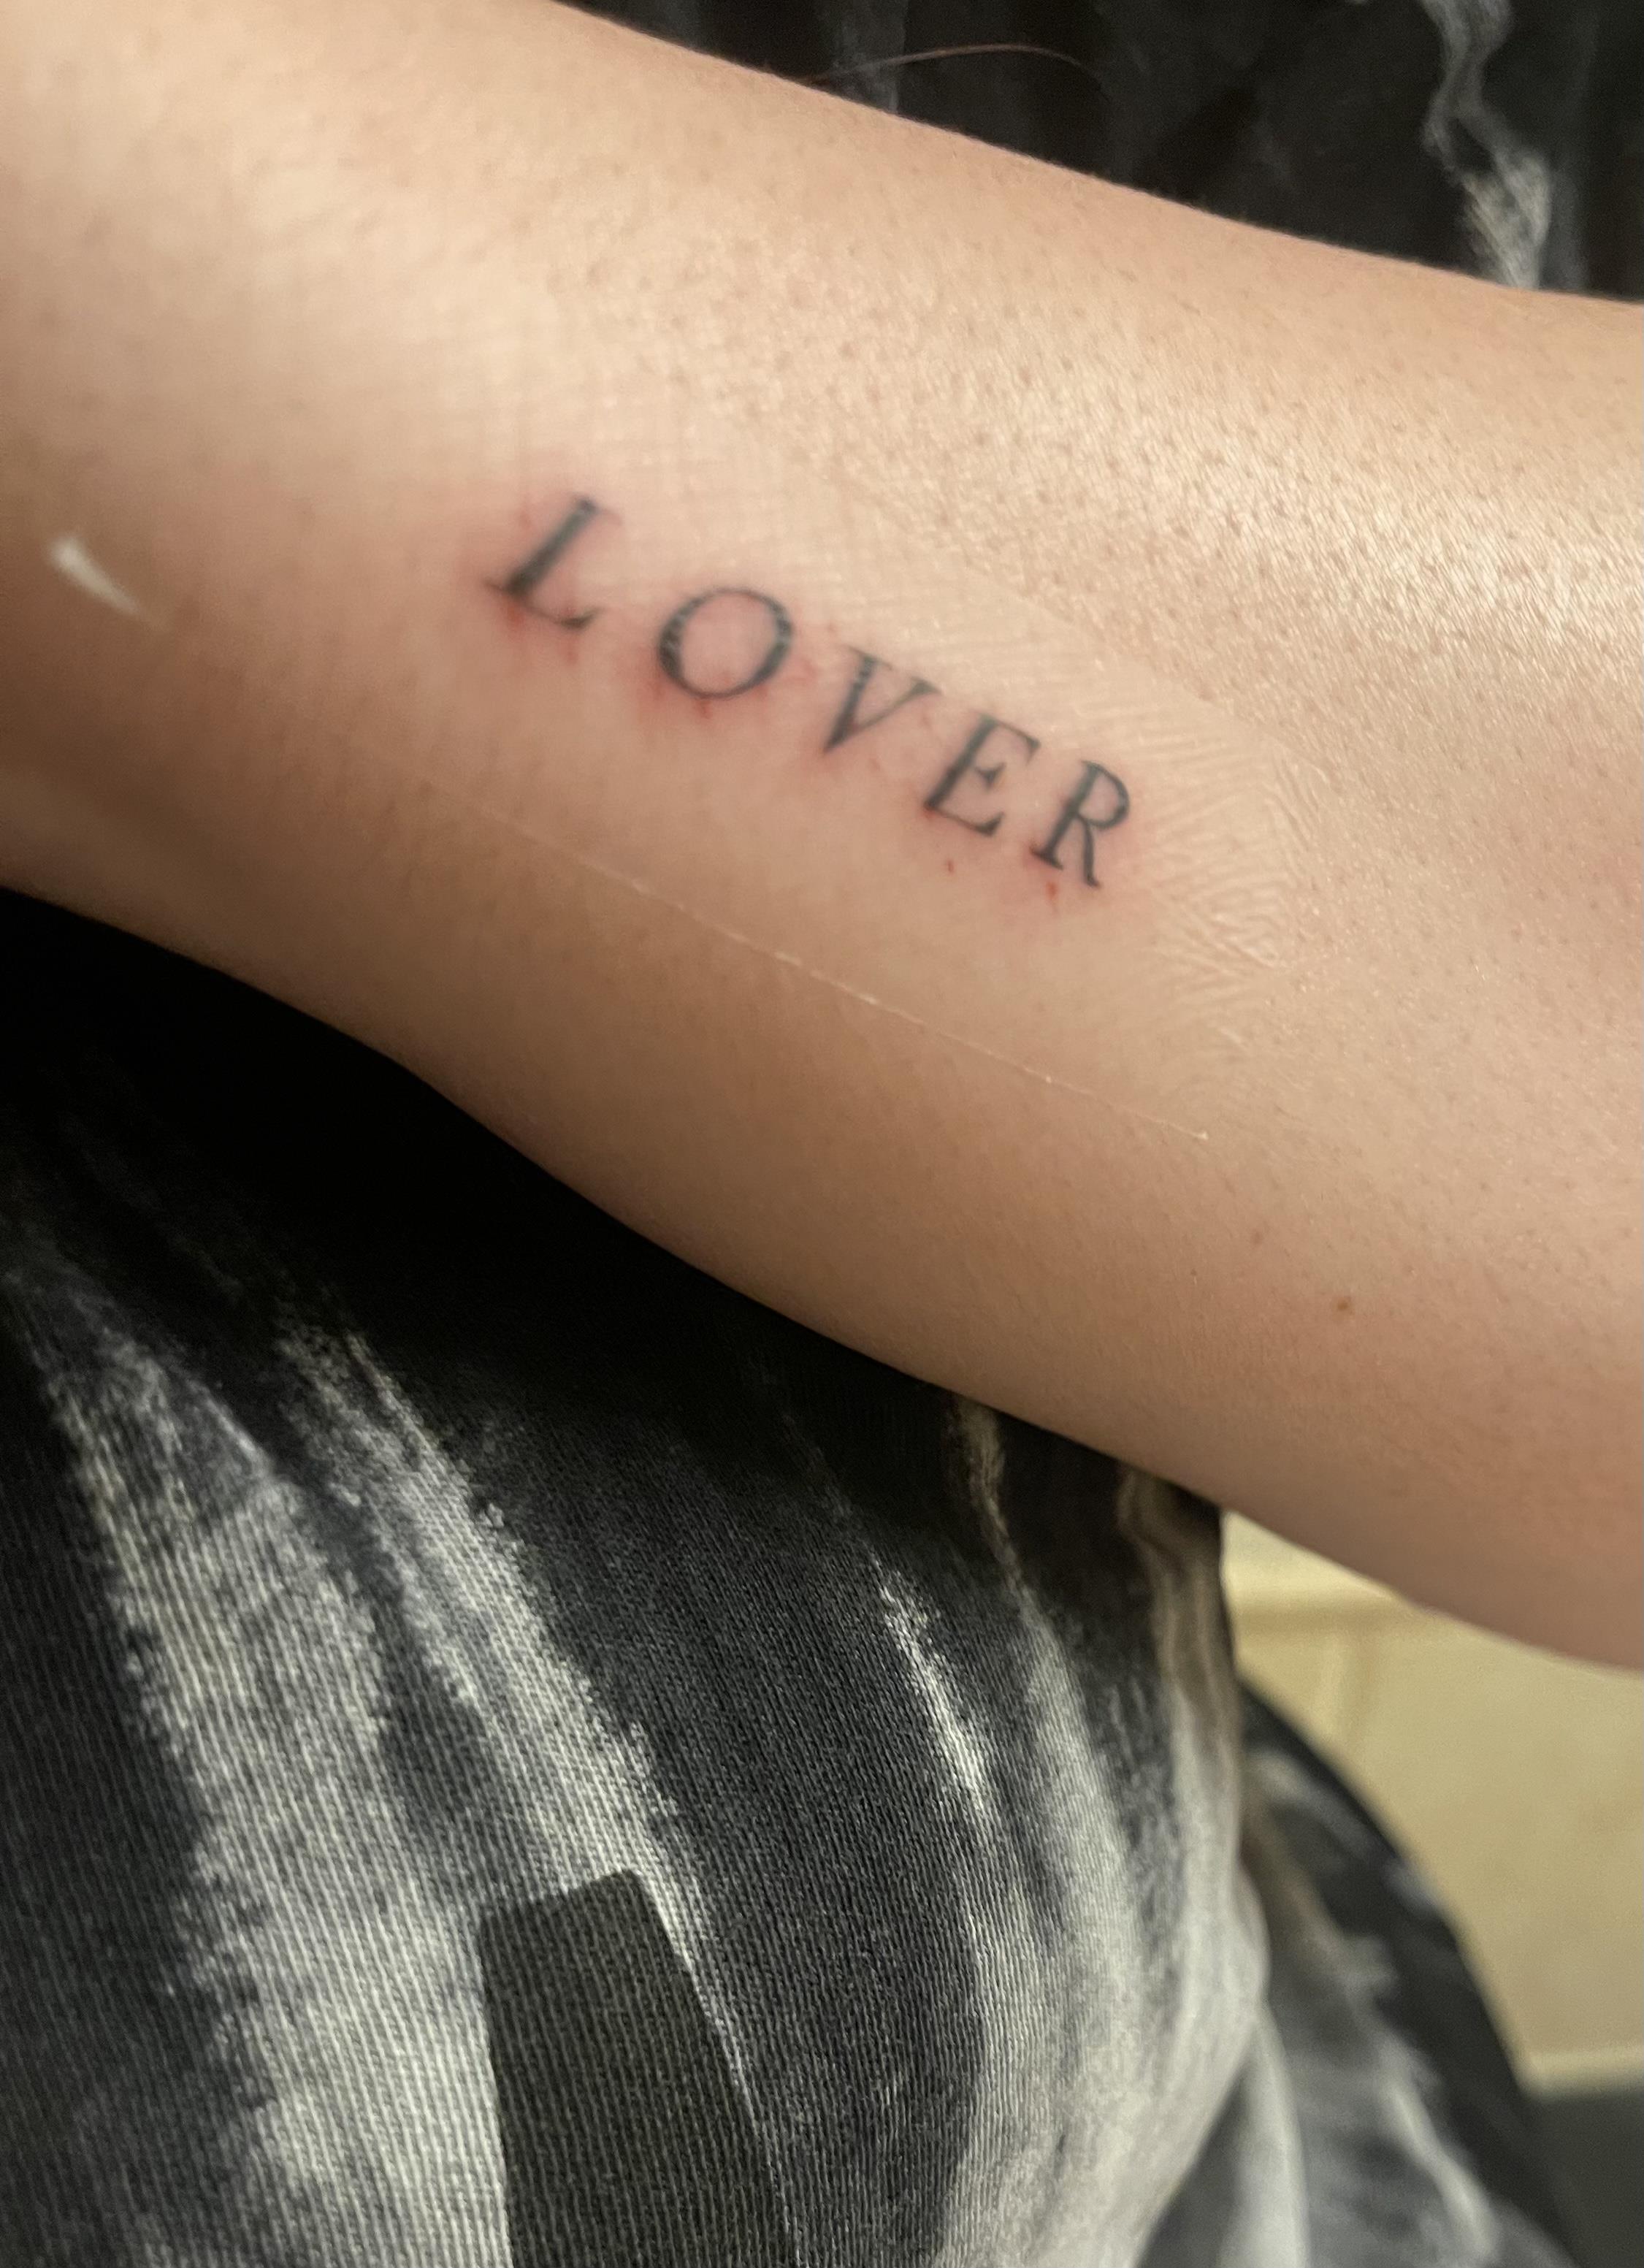 We all posting “Loser” tattoos now? Here's mine : r/gratefuldead